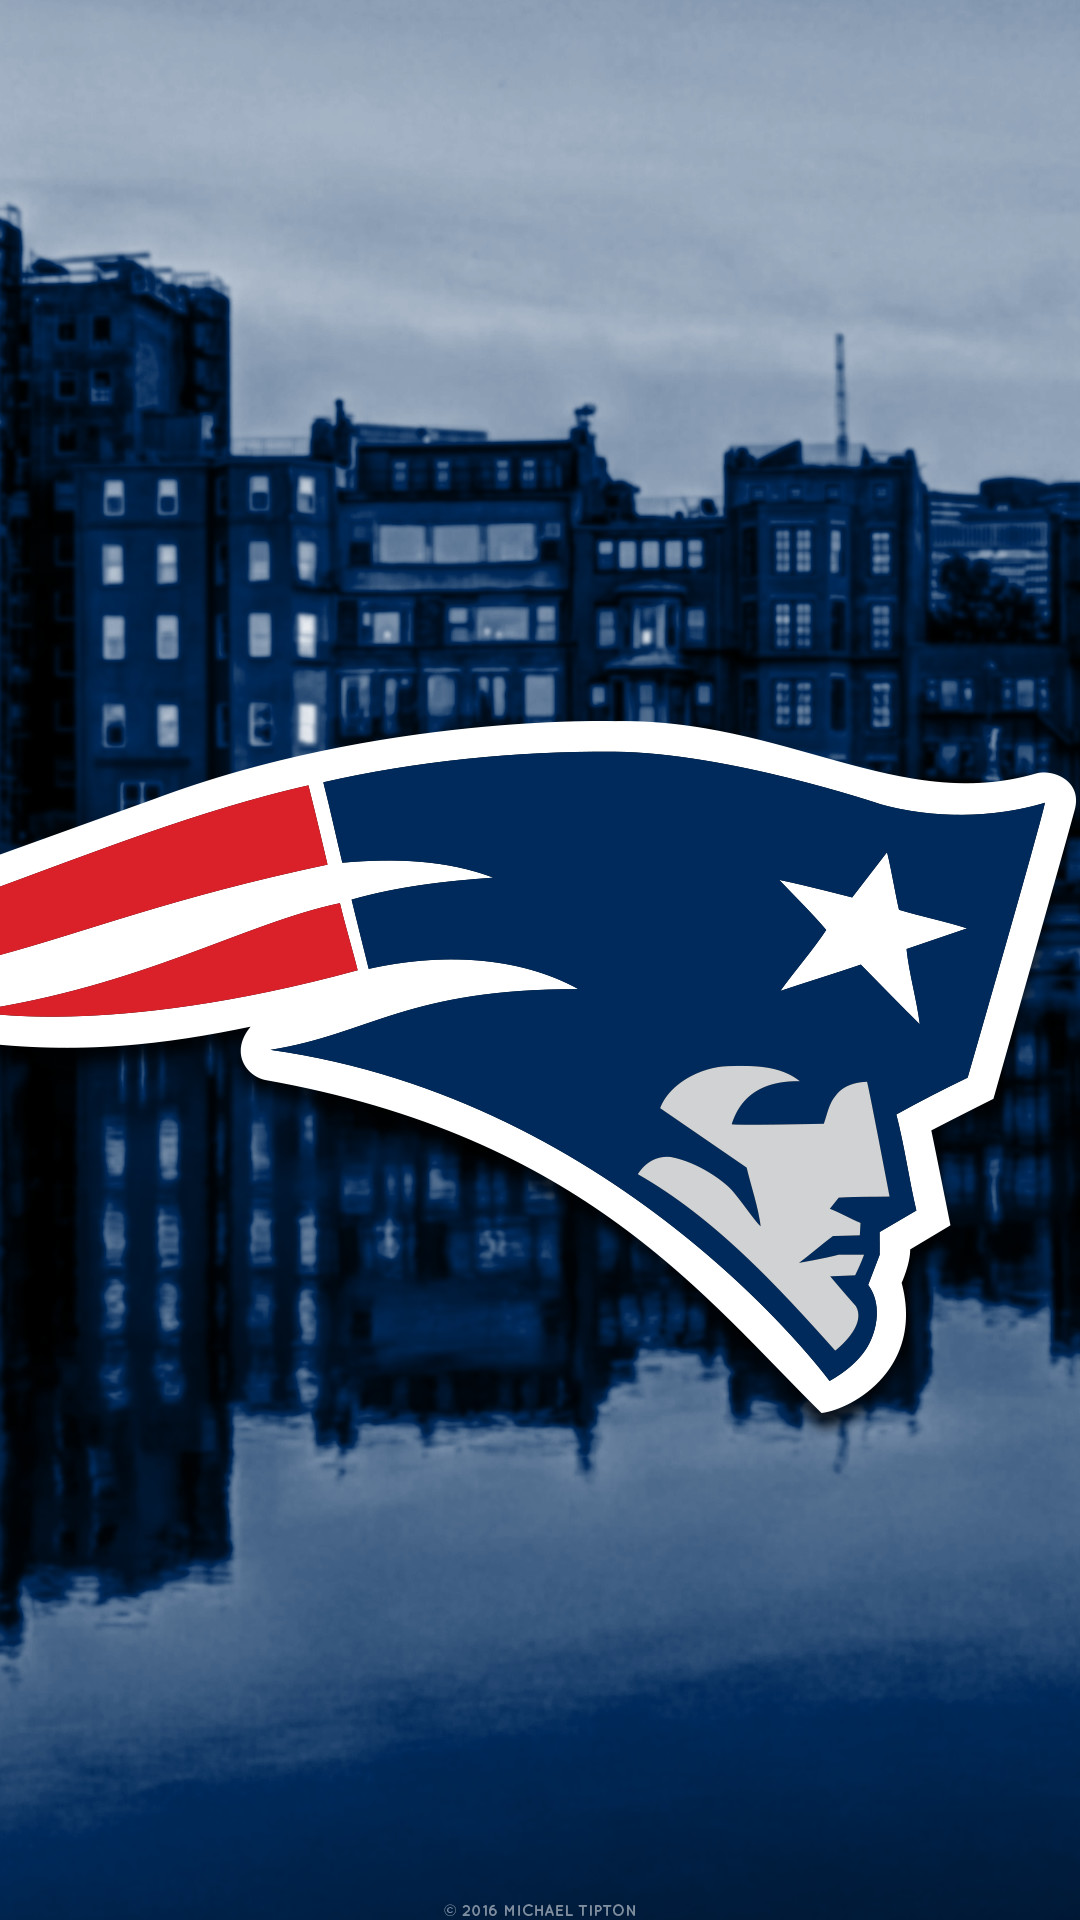 1080x1920 ... New England Patriots city 2017 logo wallpaper free iphone 5, 6, 7,  galaxy